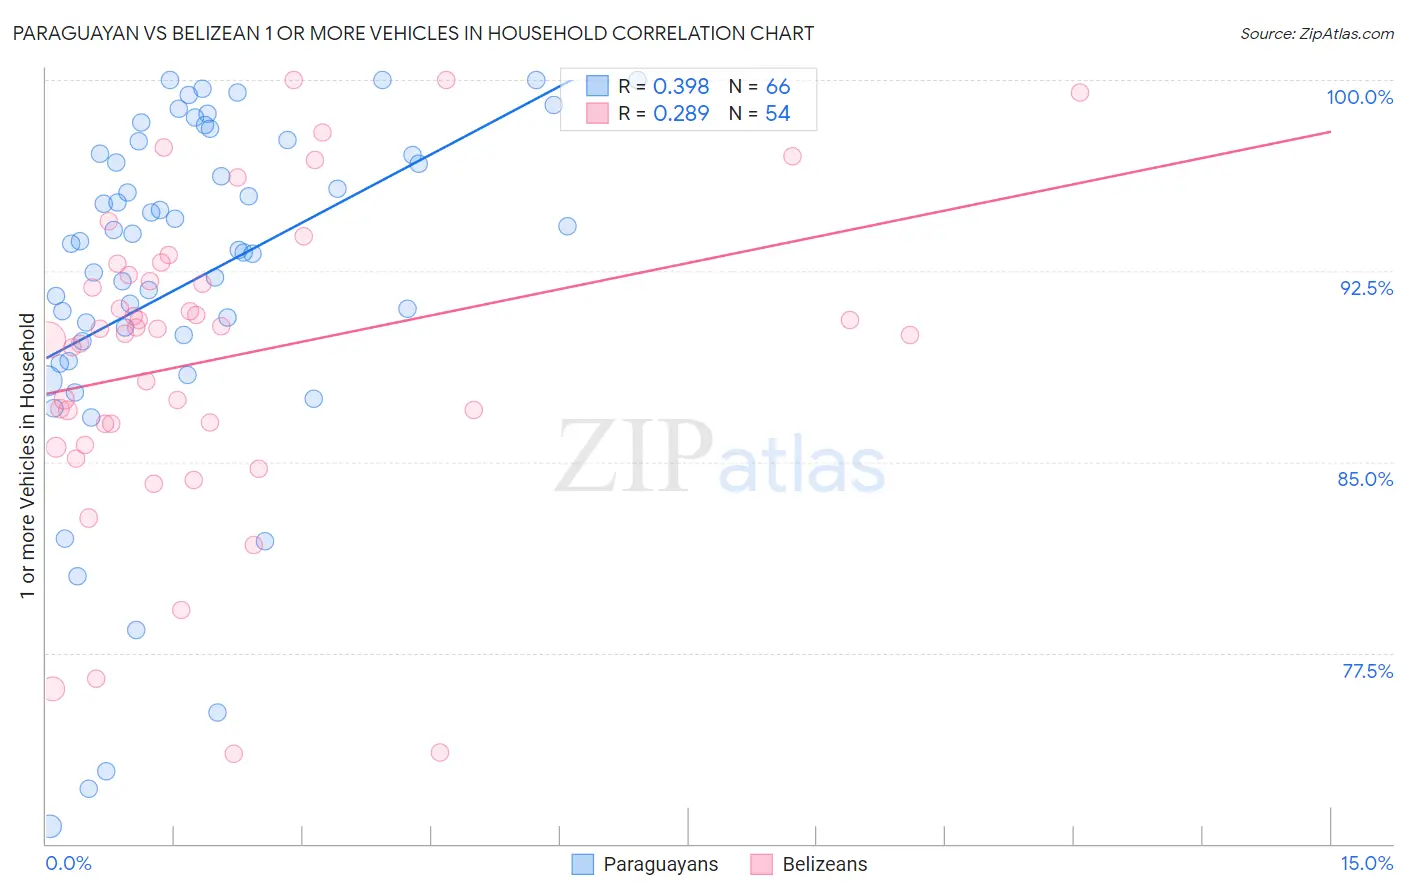 Paraguayan vs Belizean 1 or more Vehicles in Household